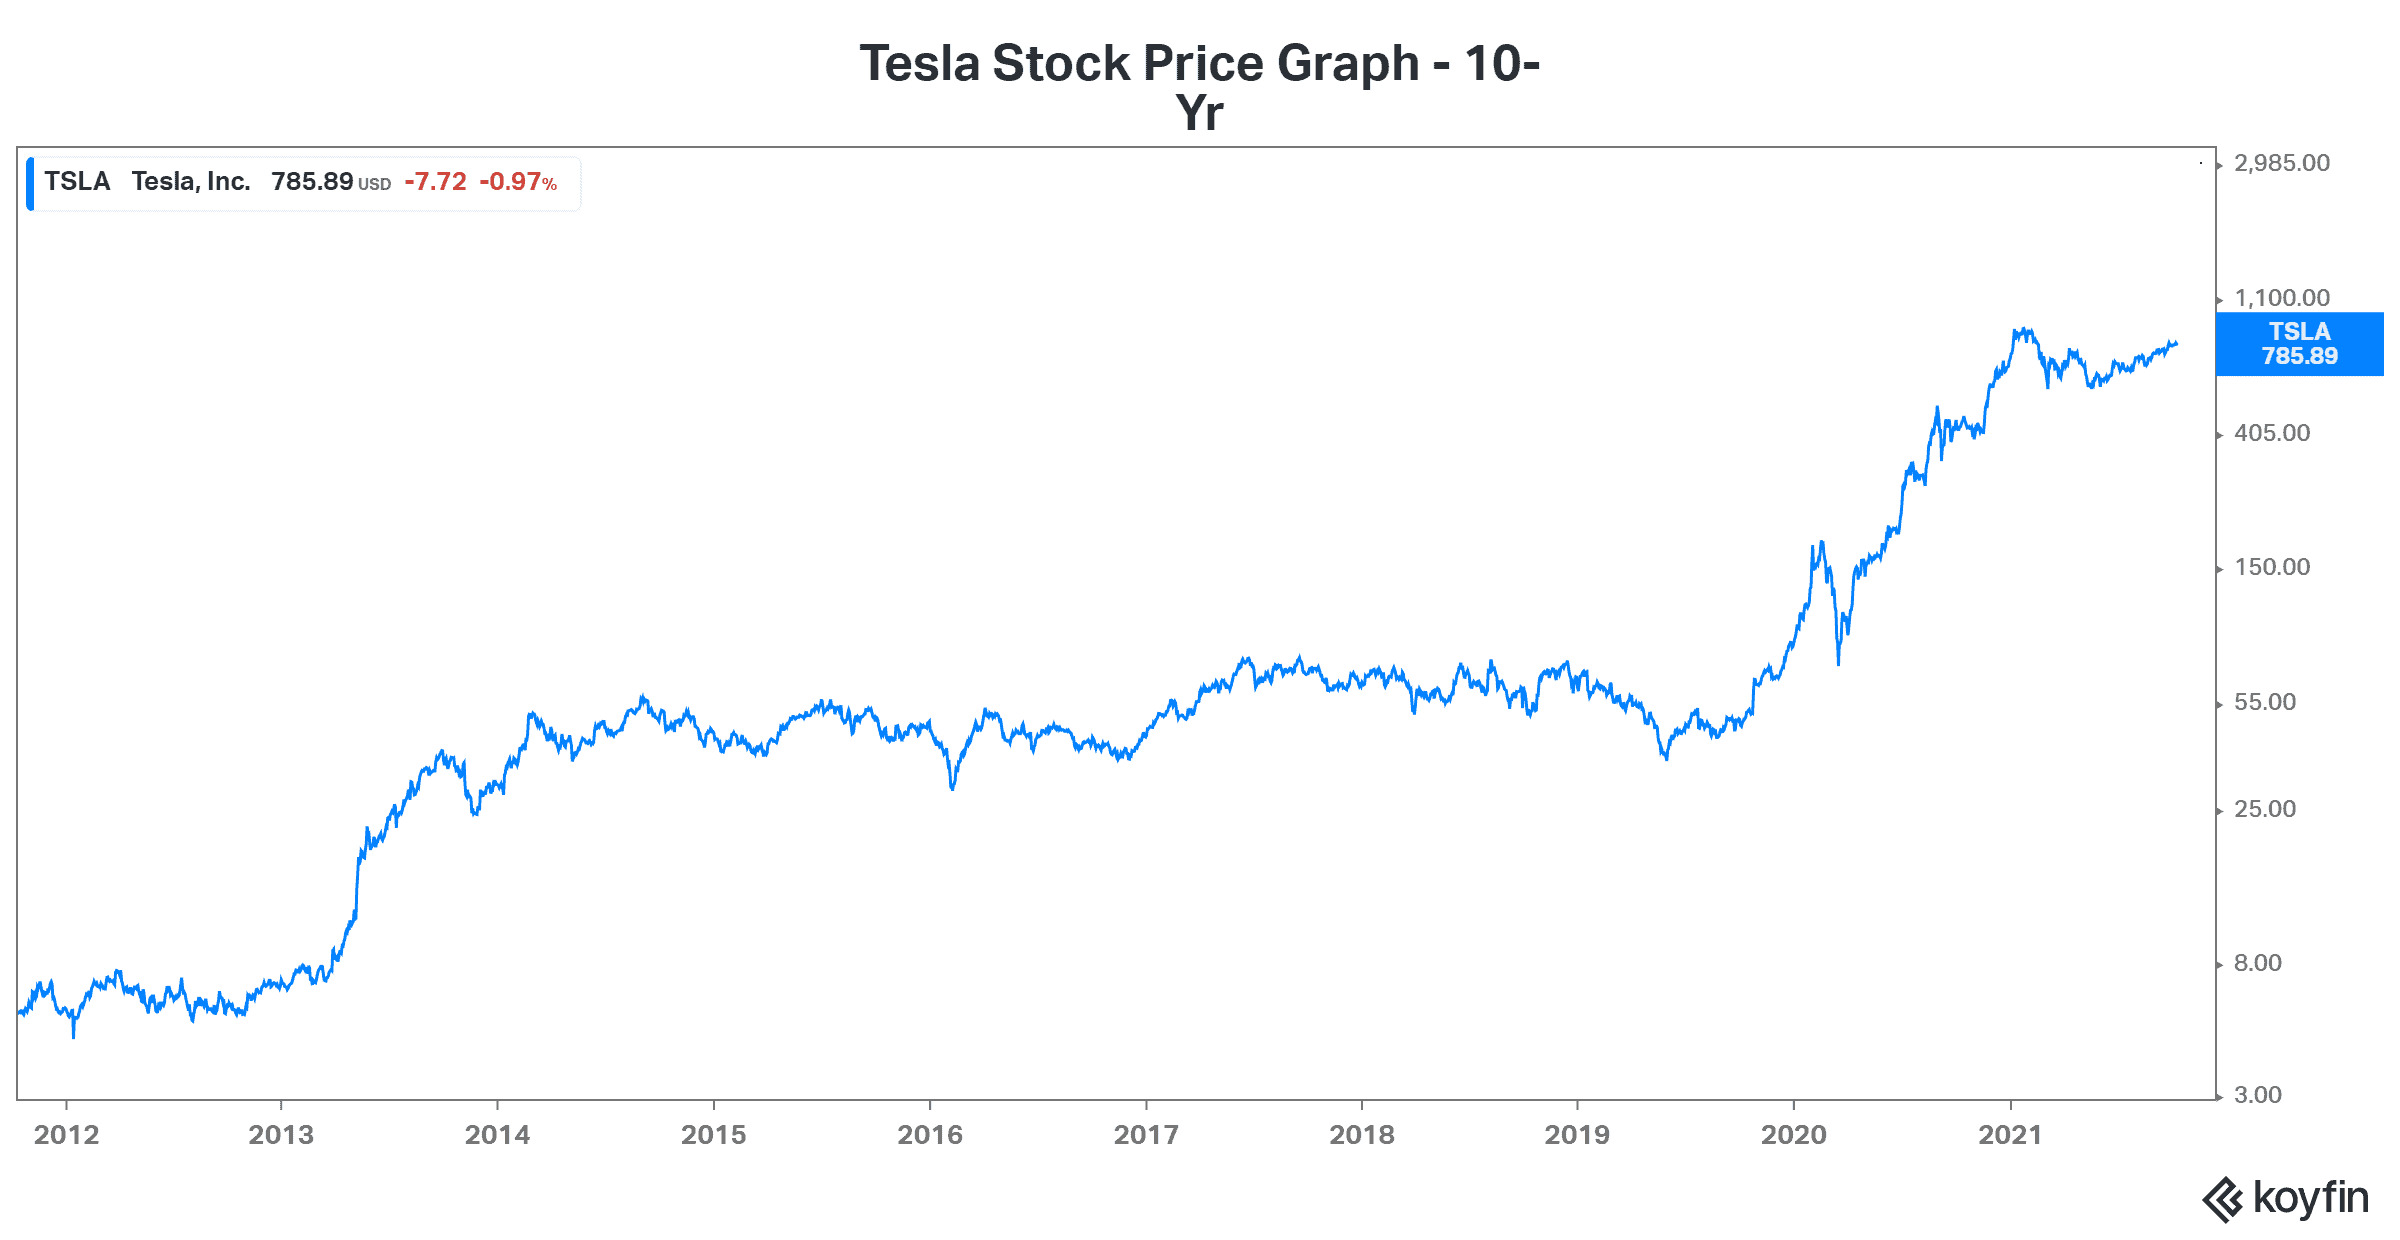 Growth stock Tesla stock price